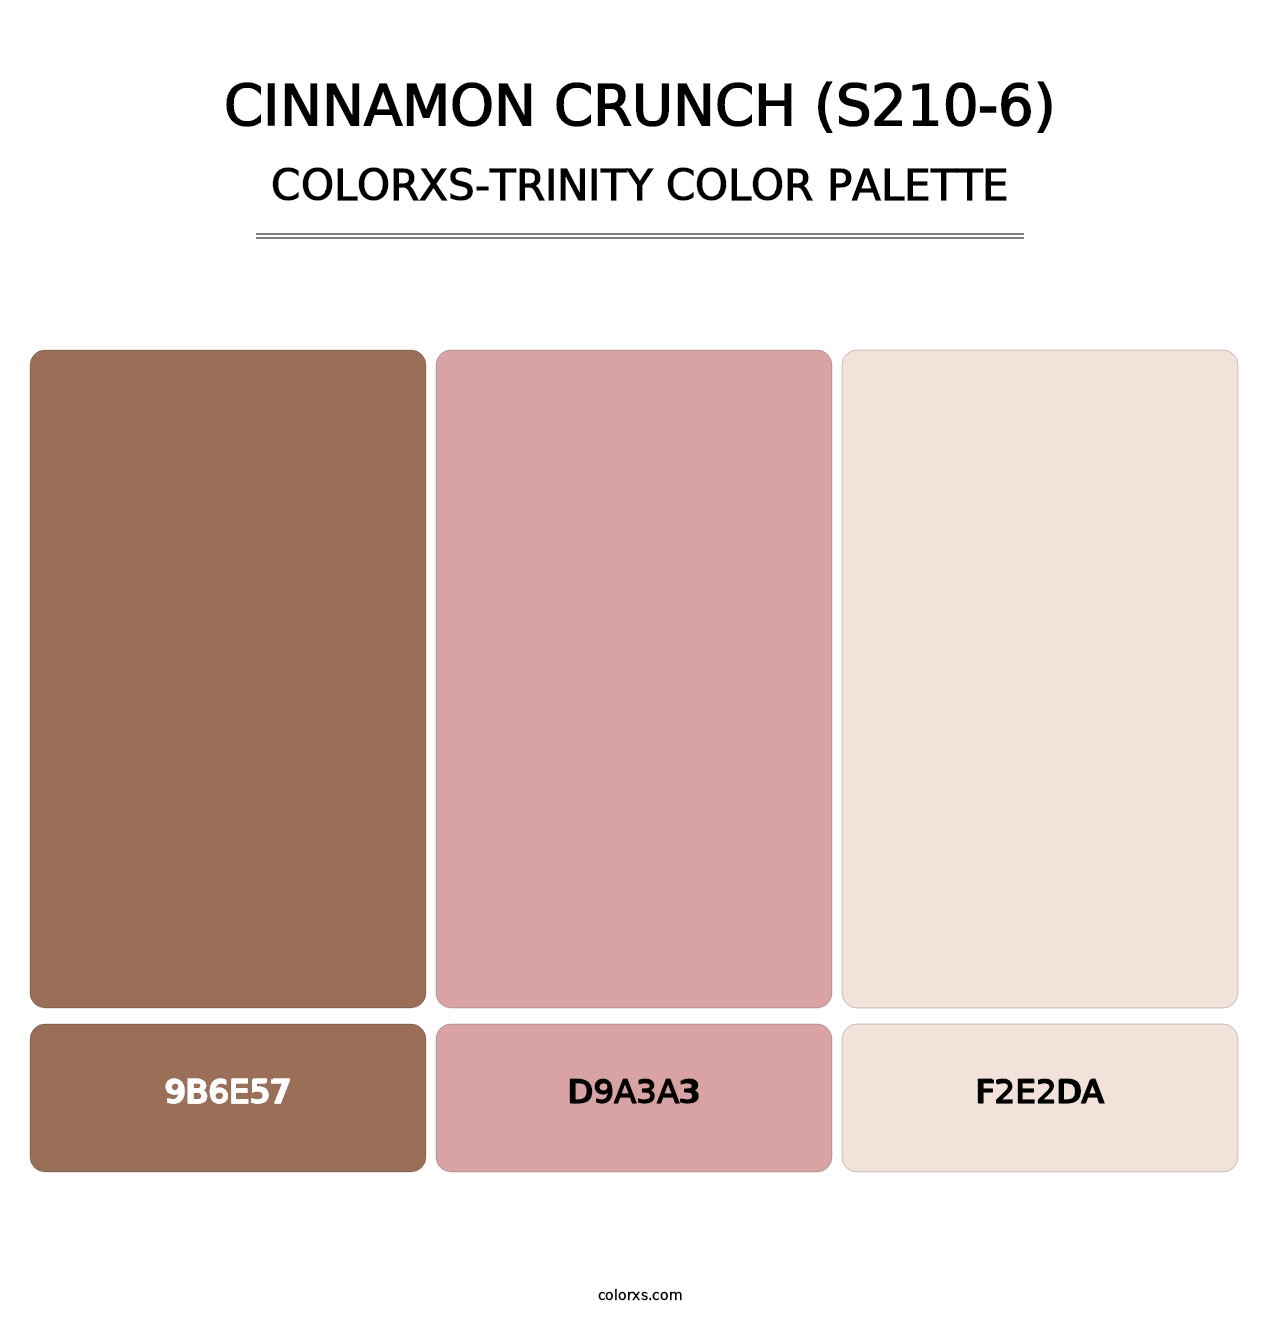 Cinnamon Crunch (S210-6) - Colorxs Trinity Palette